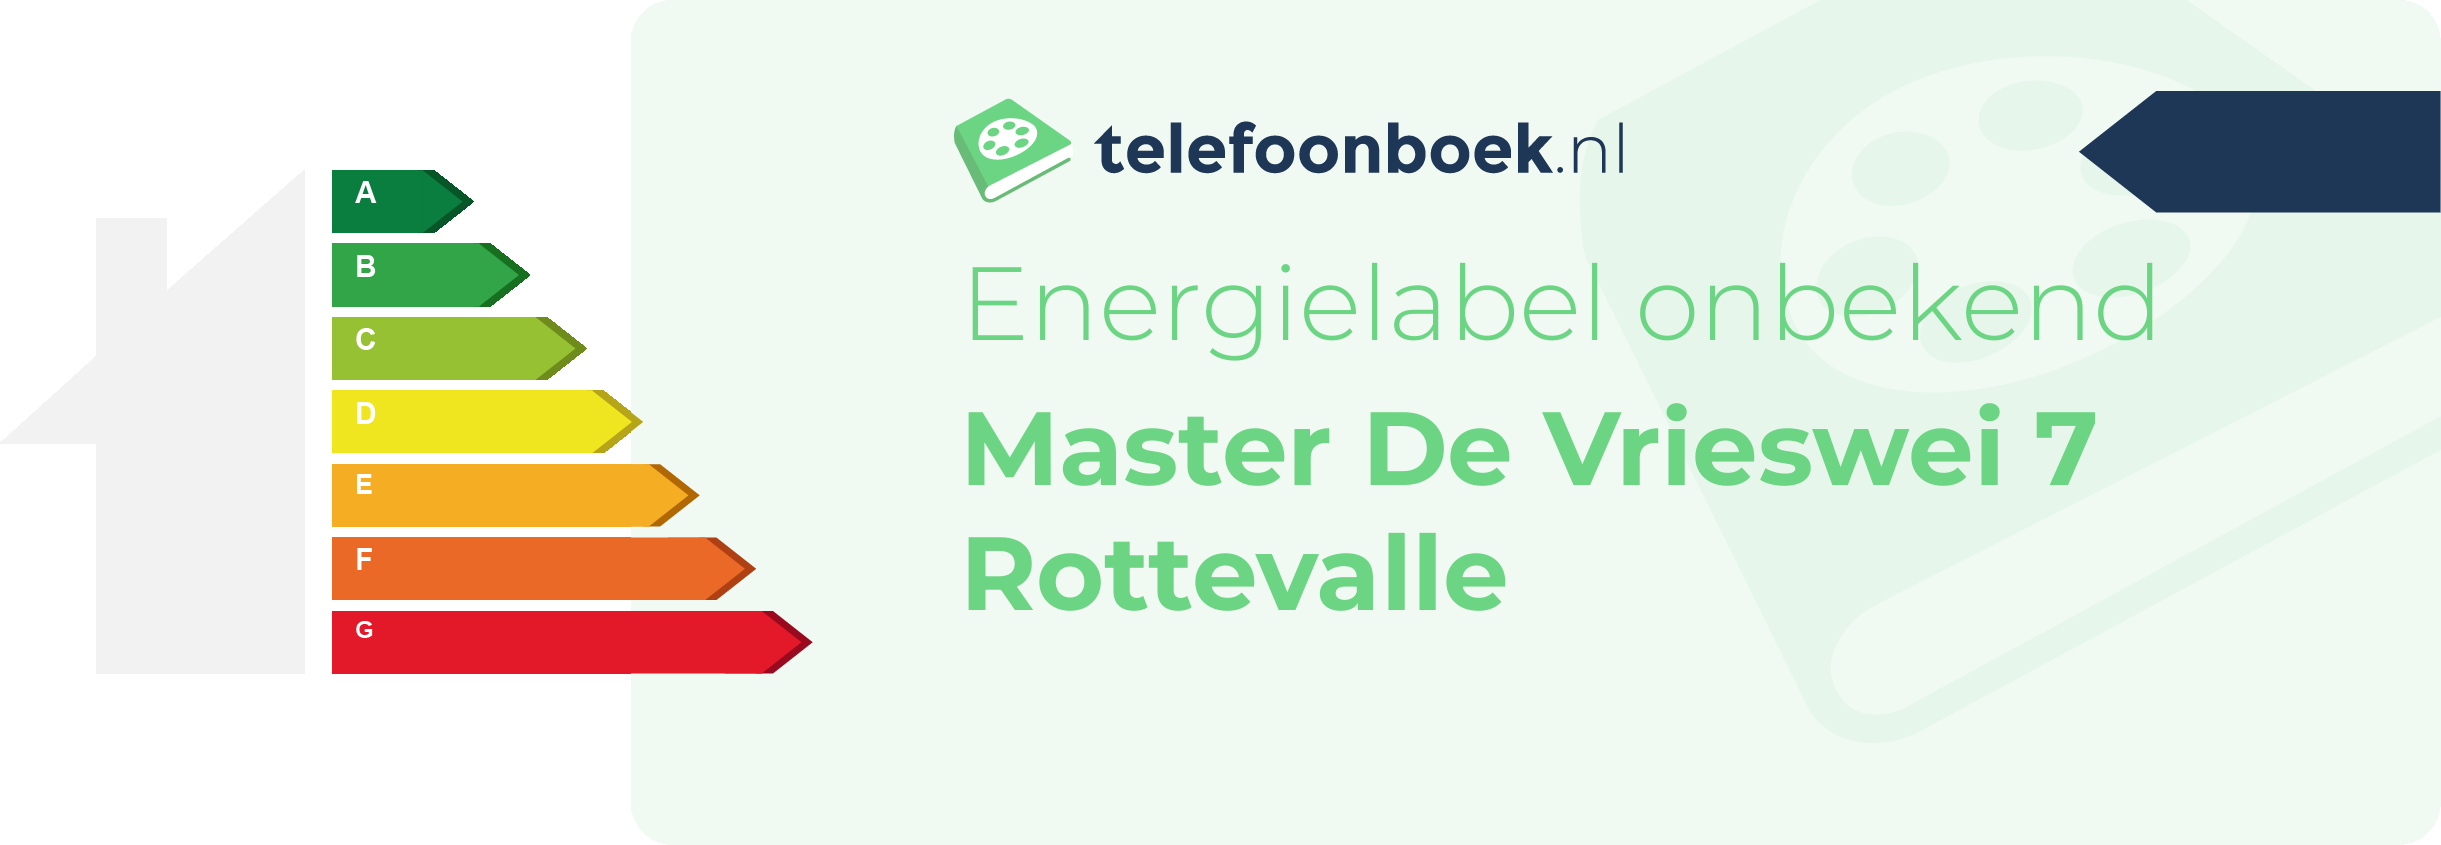 Energielabel Master De Vrieswei 7 Rottevalle